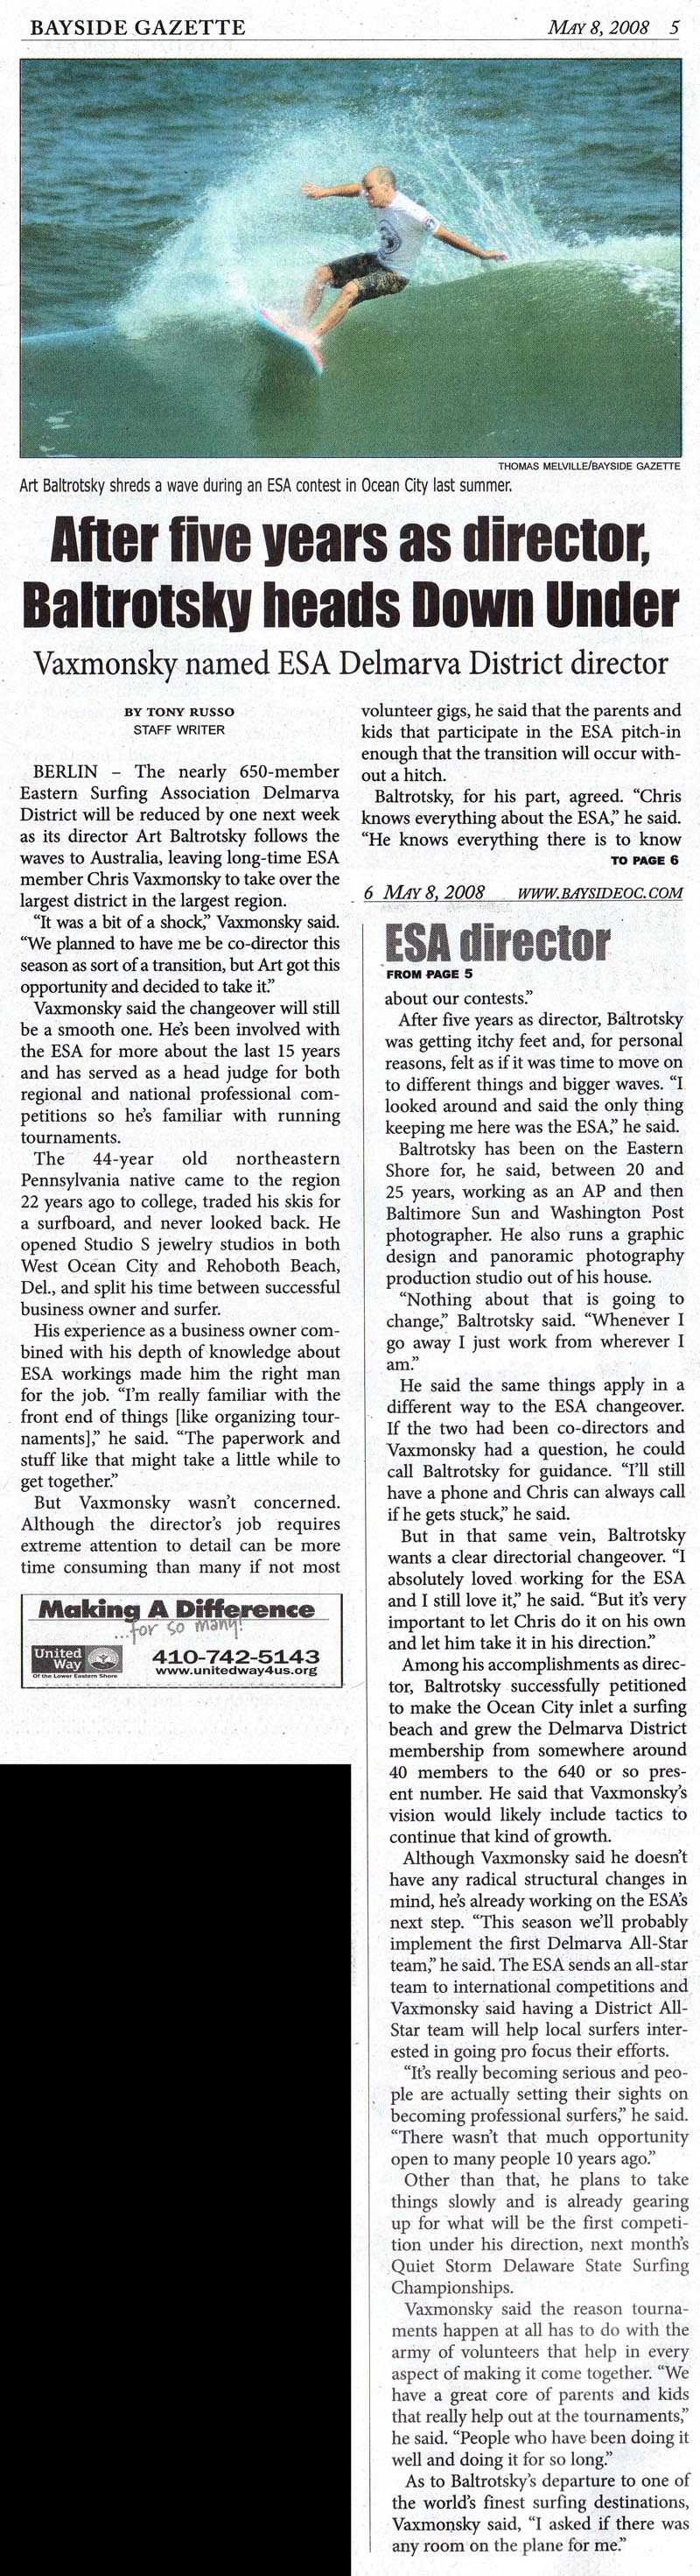 Bayside Gazette May 8, 2008